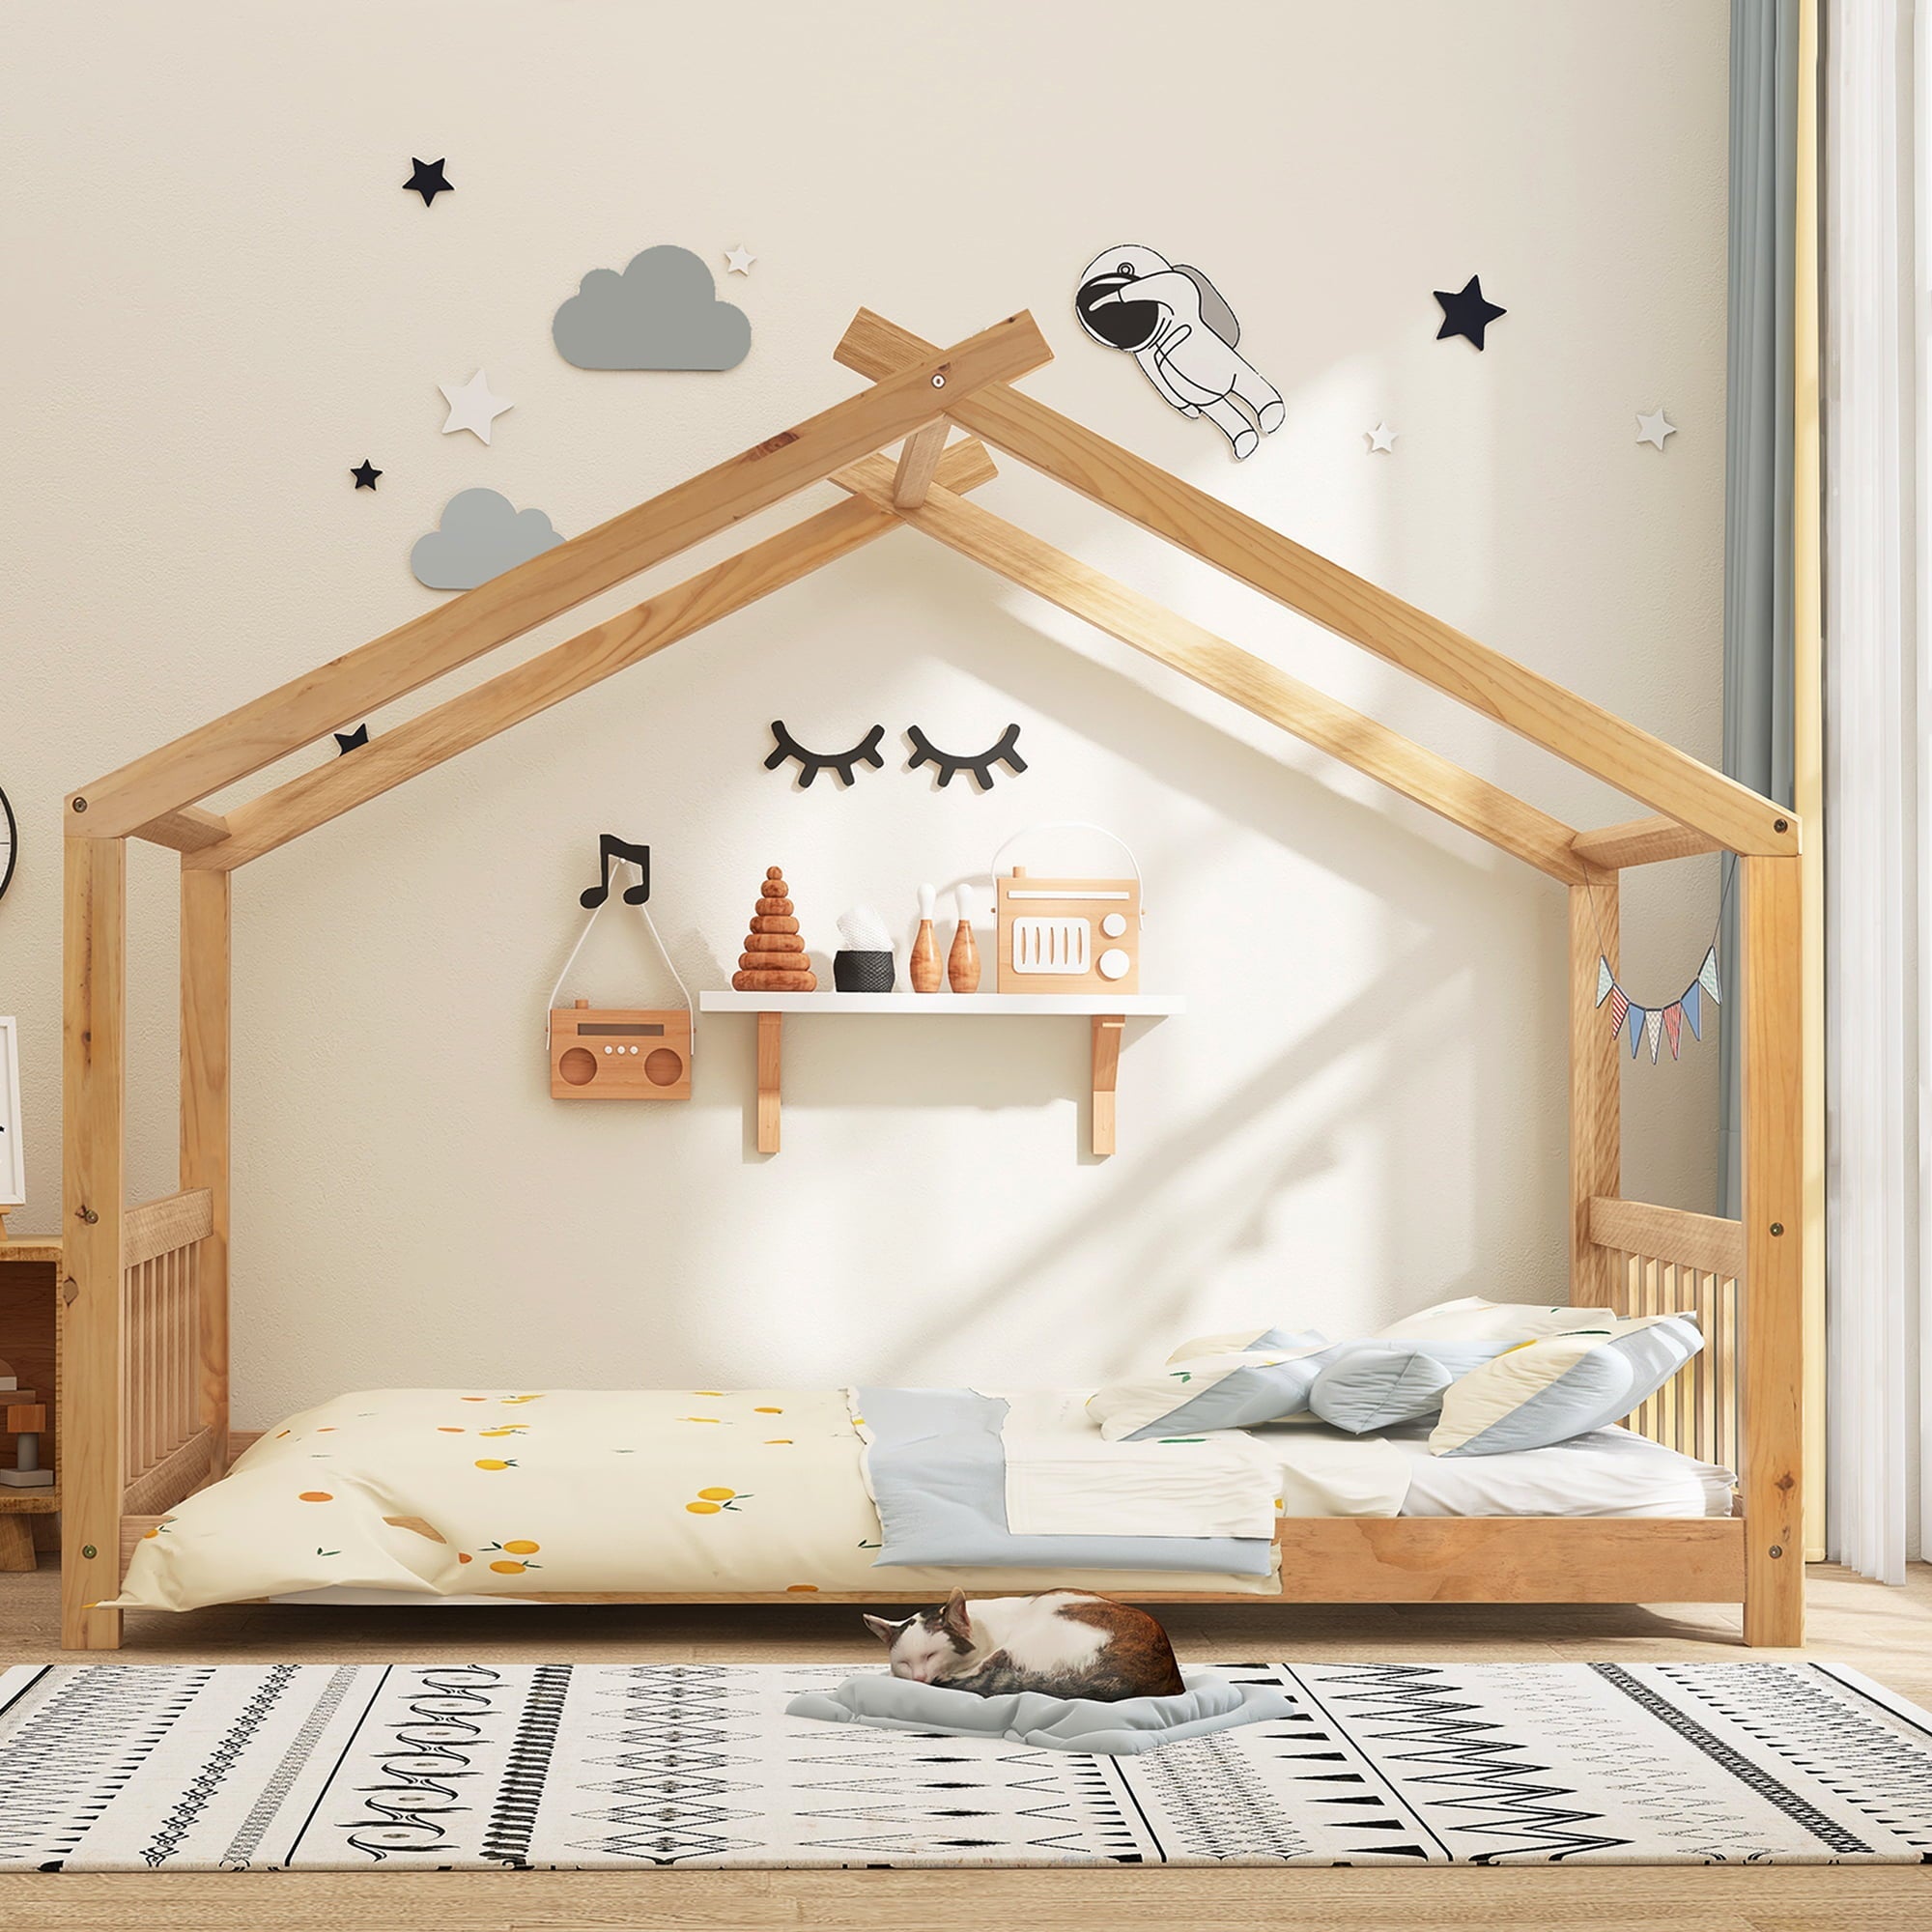 Euroco Wood House-Shaped Platform Bed for Kids, Wood Color